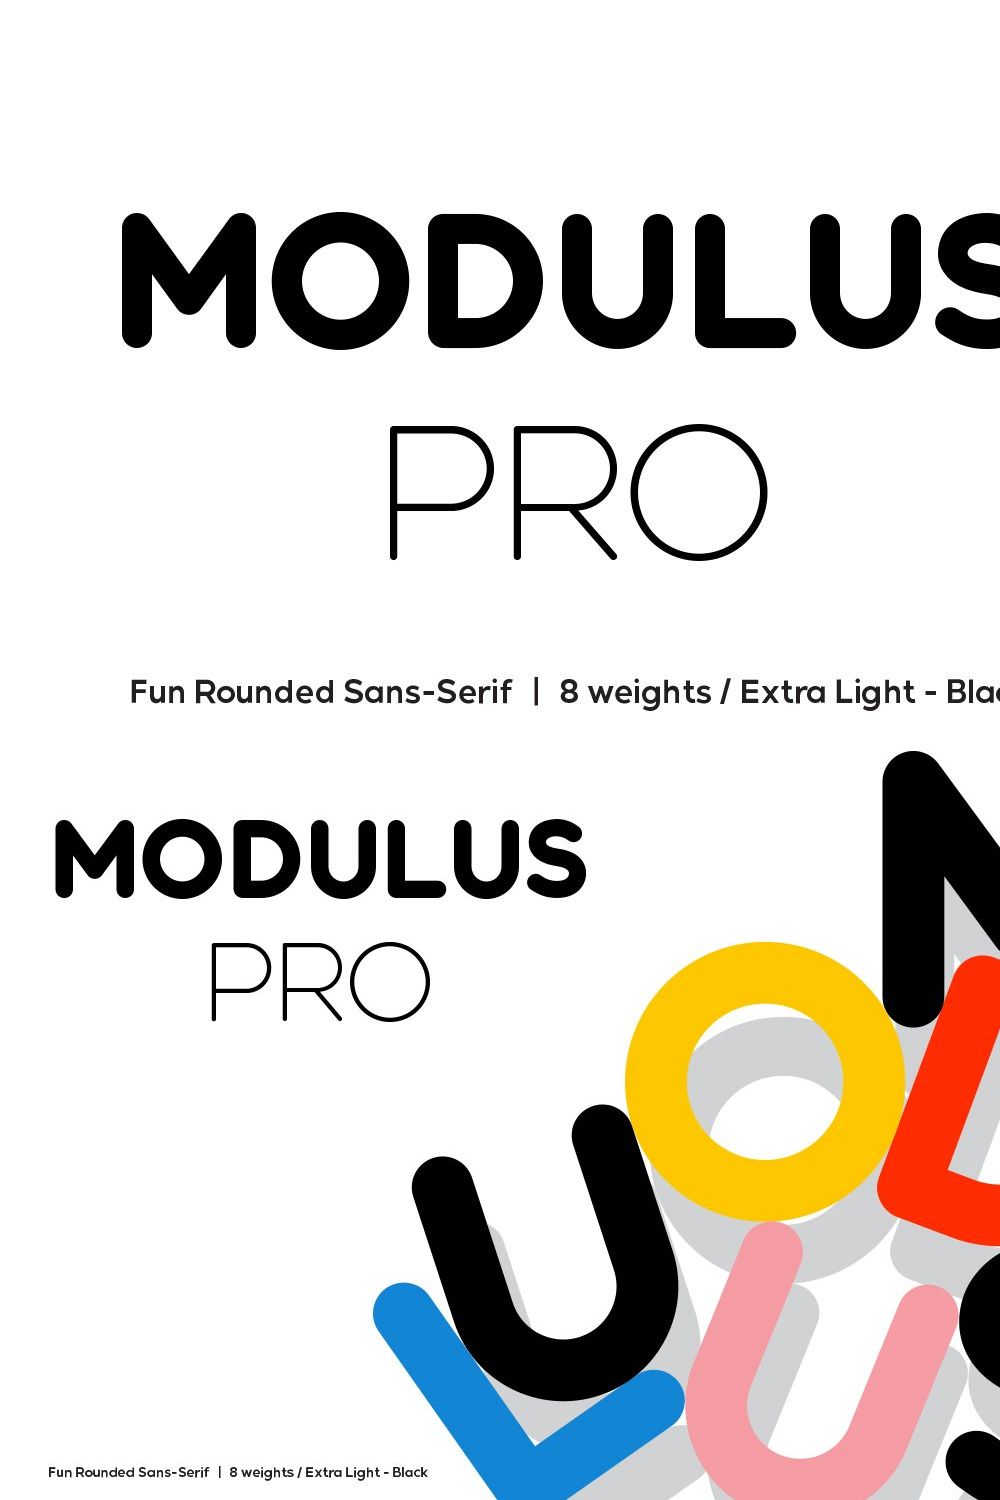 Modulus Pro pinterest preview image.